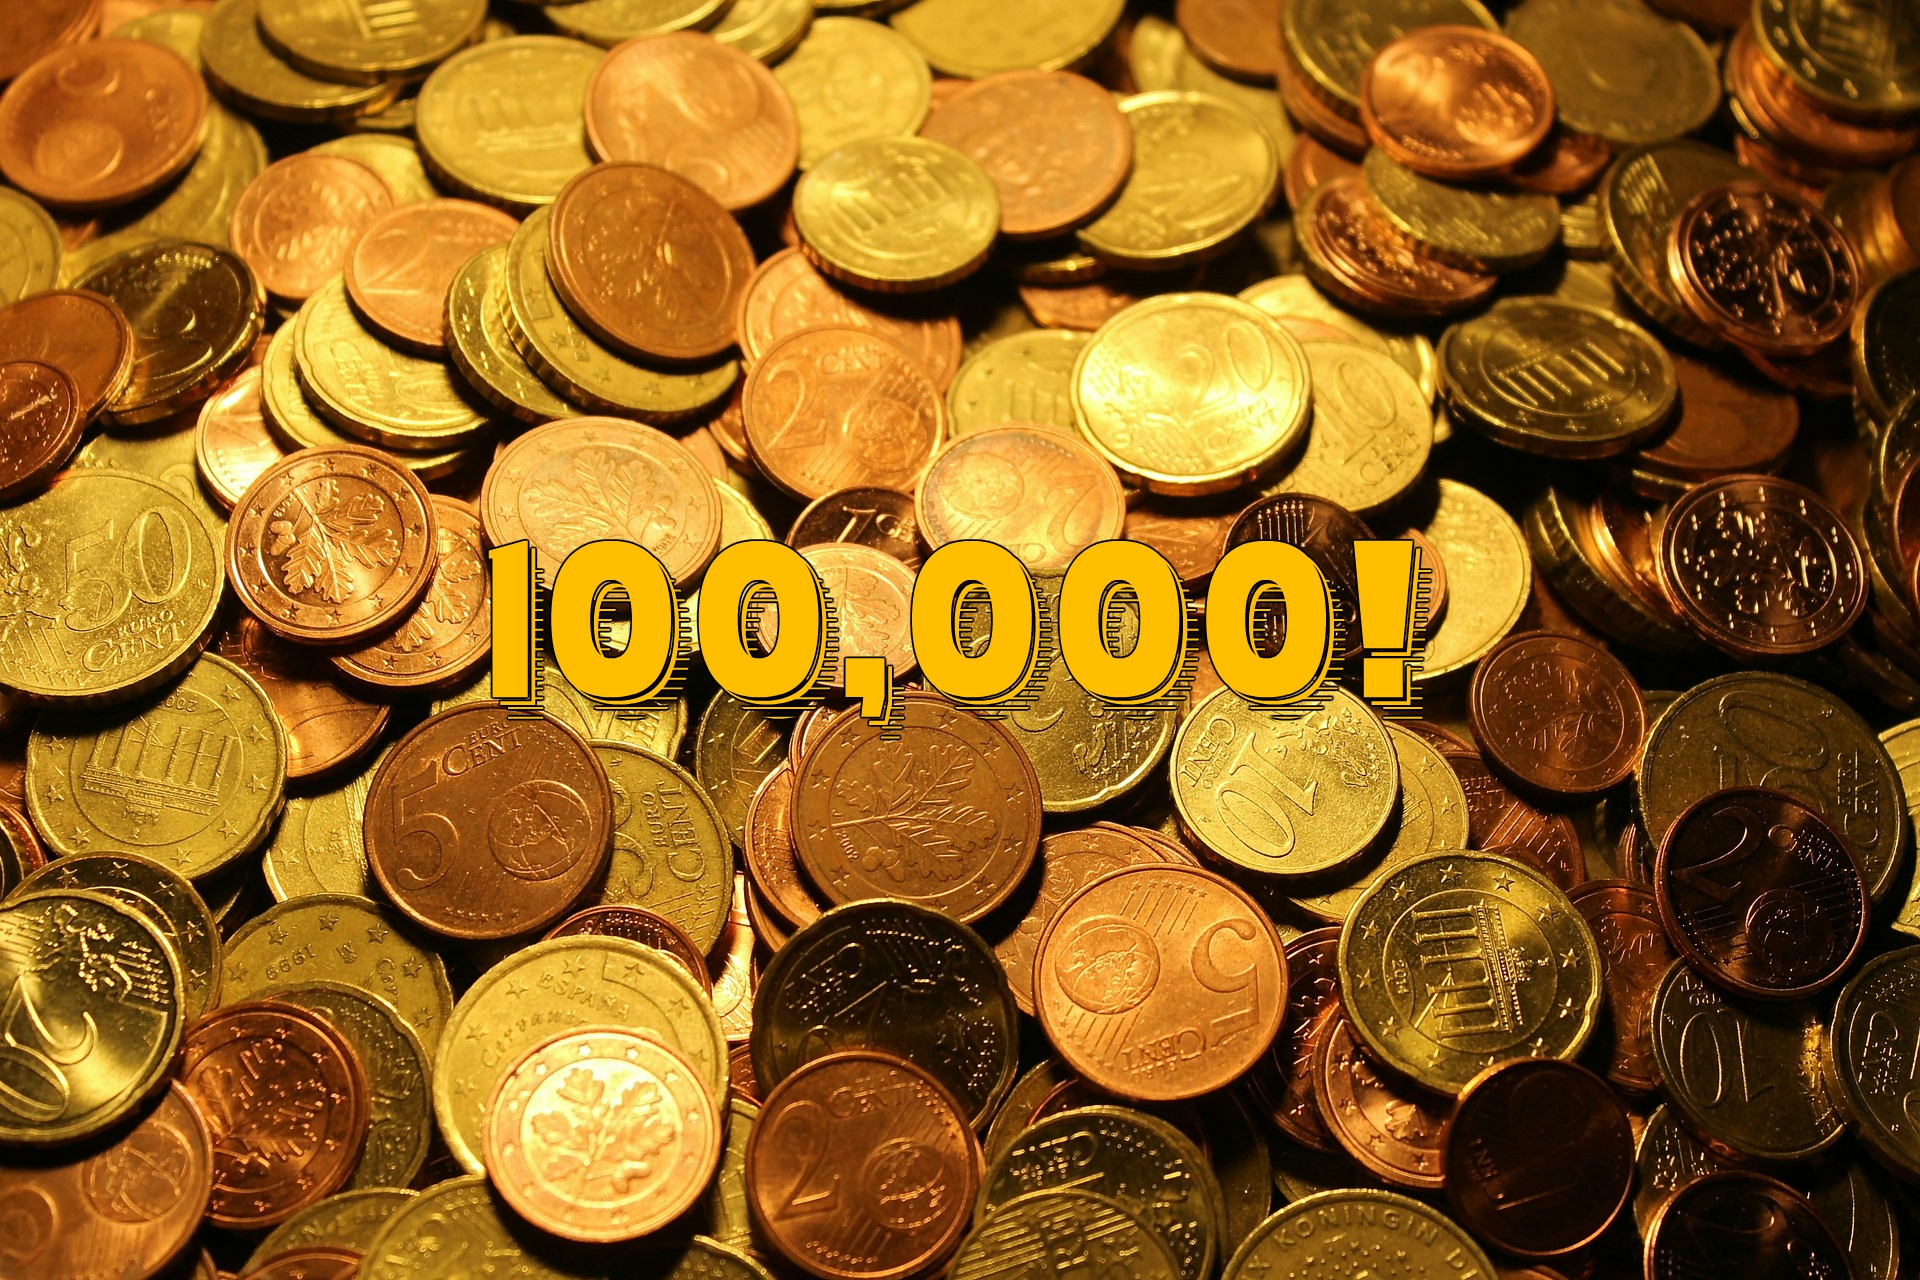 100,000 FM Coins